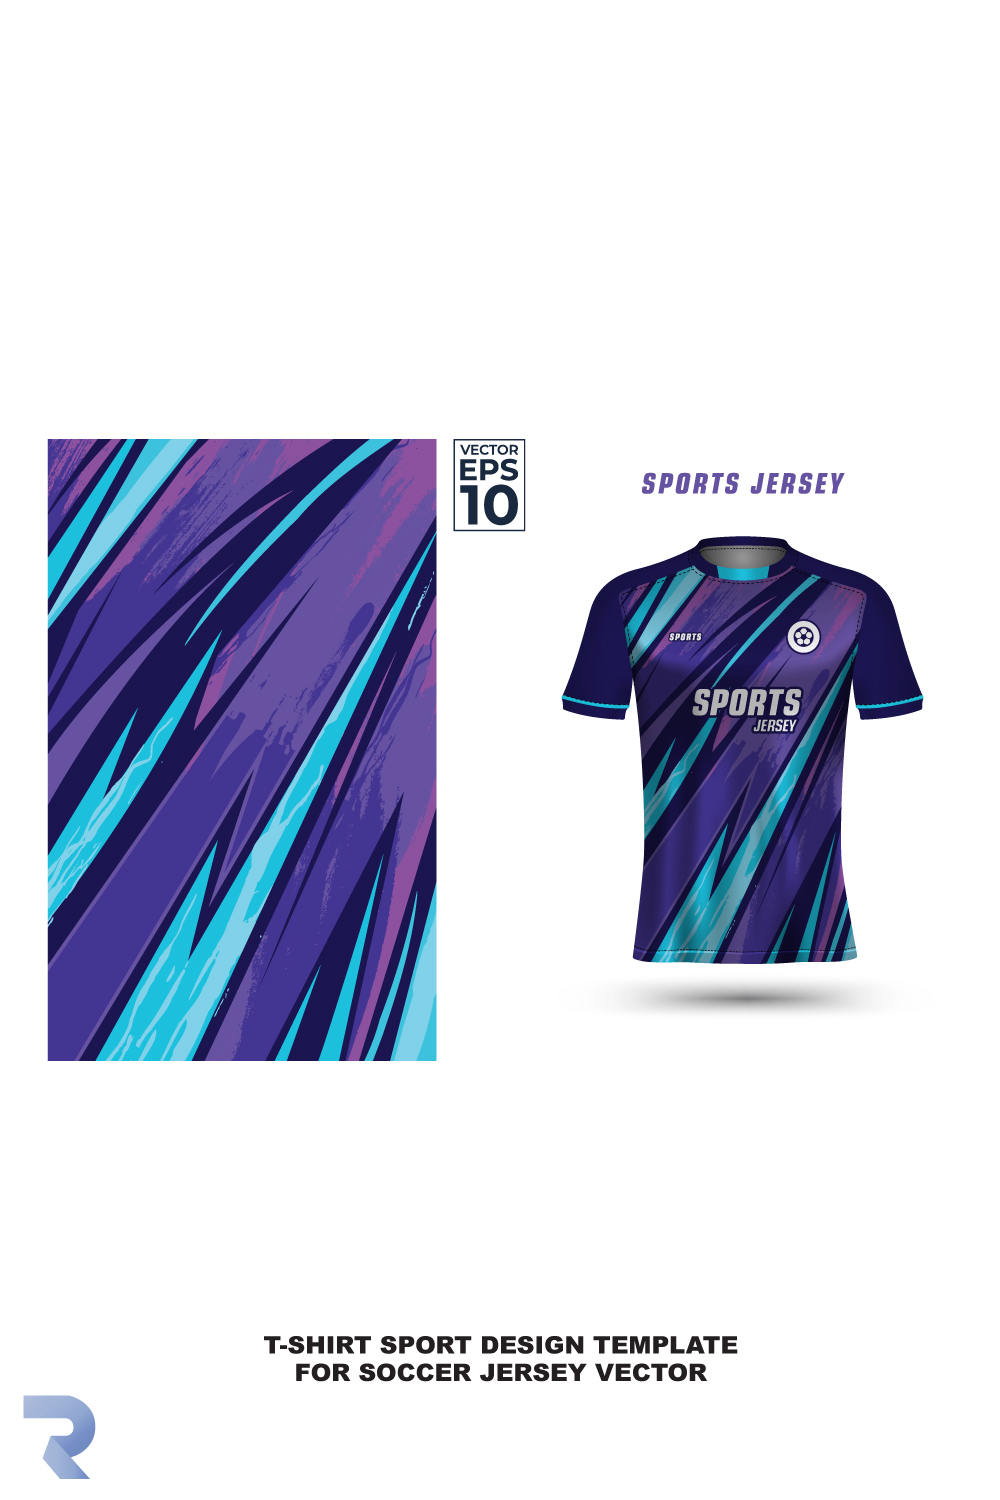 T-shirt sport design template for soccer jersey vector pinterest preview image.